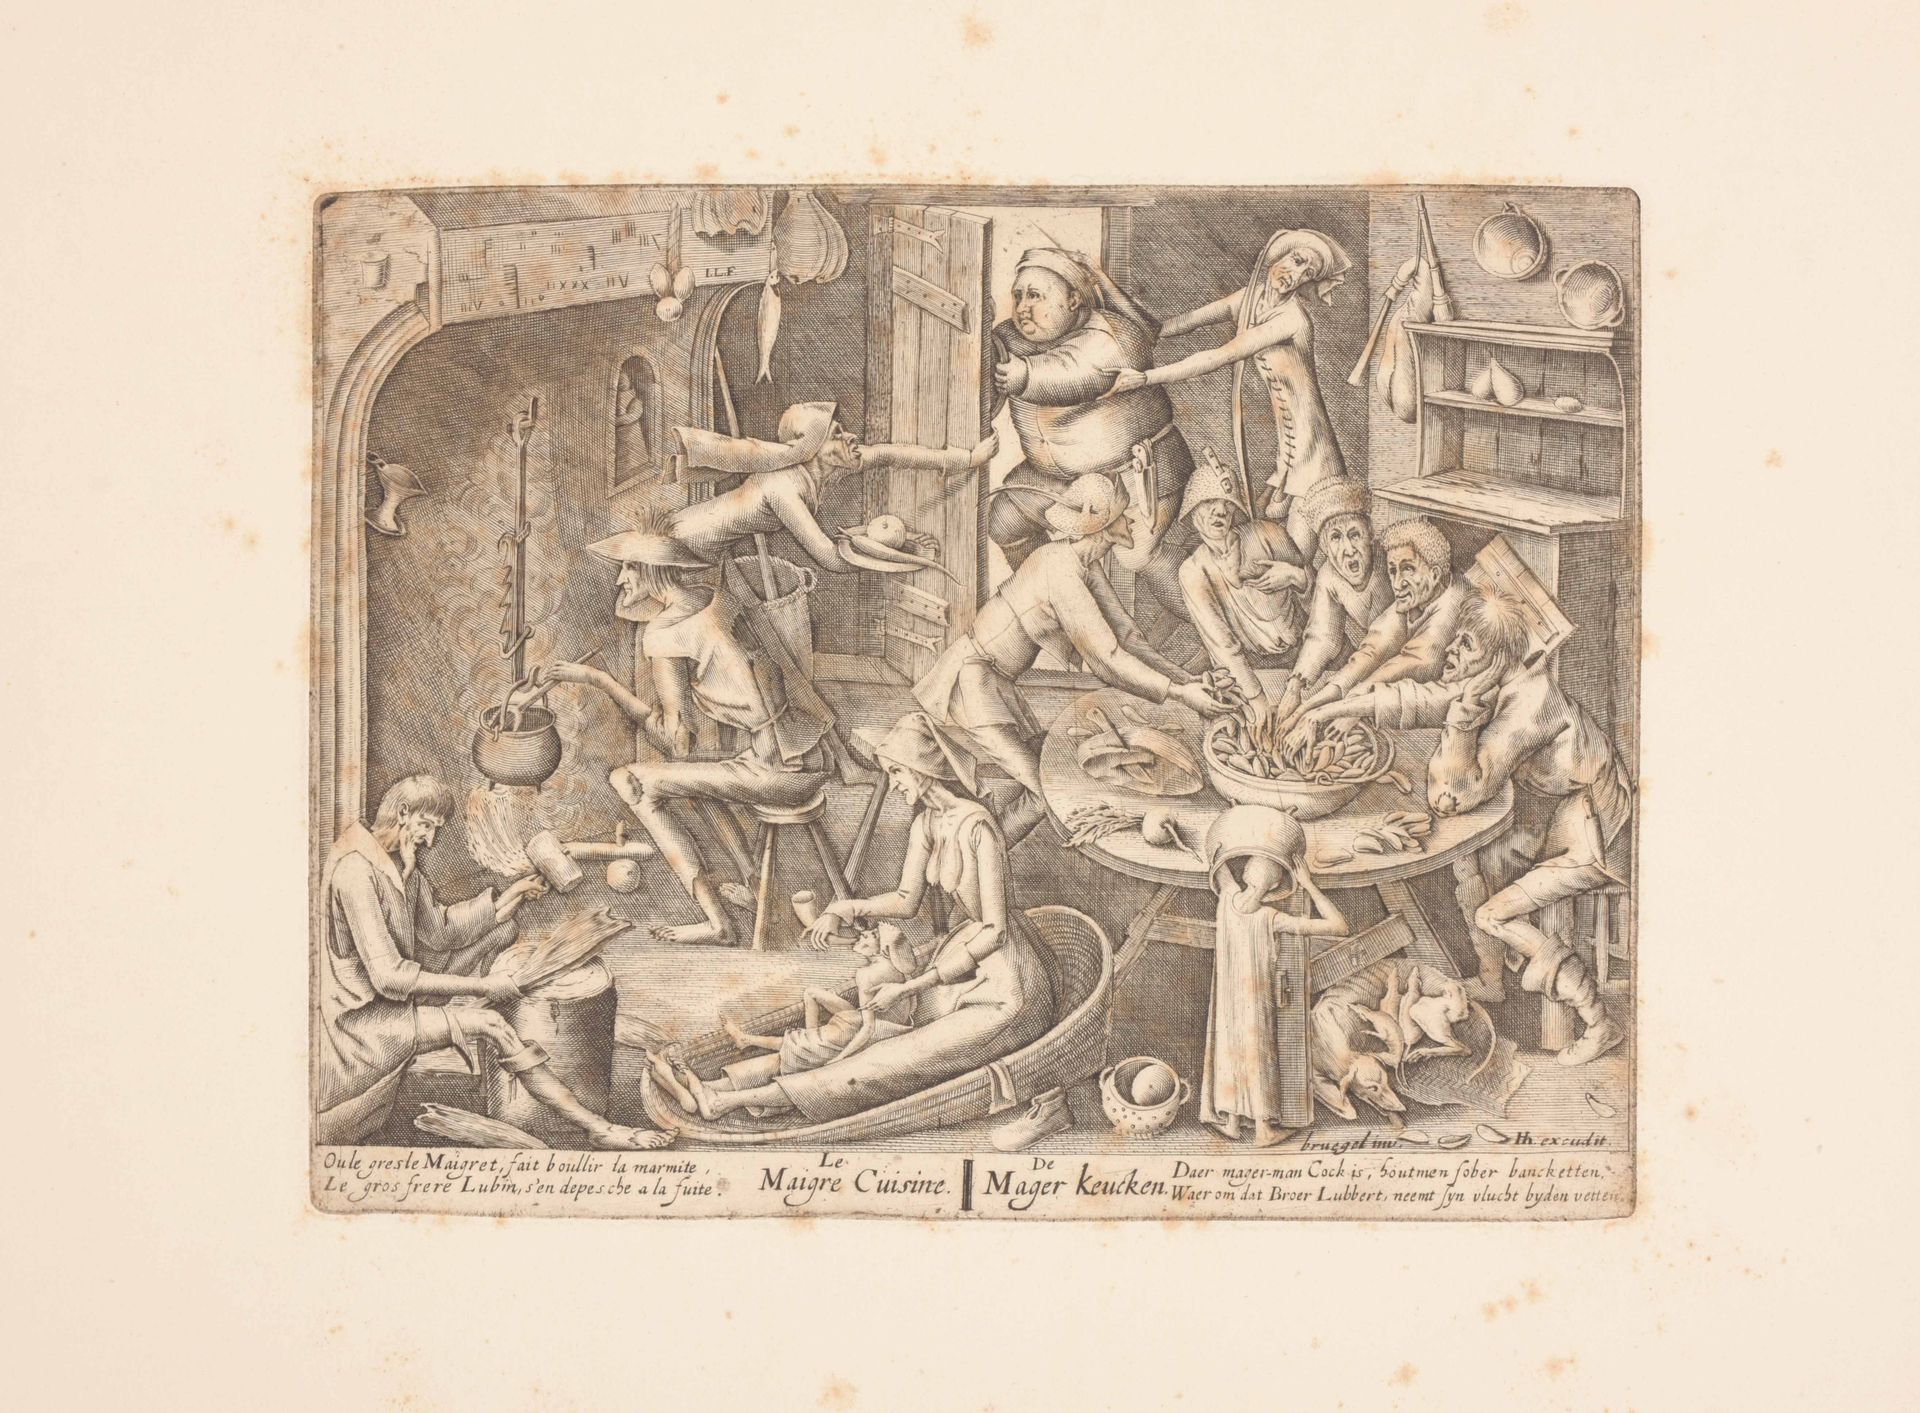 [BRUEGEL, Pieter after (ca. 1525- ca. 1569] La cucina povera / La cucina ricca

&hellip;